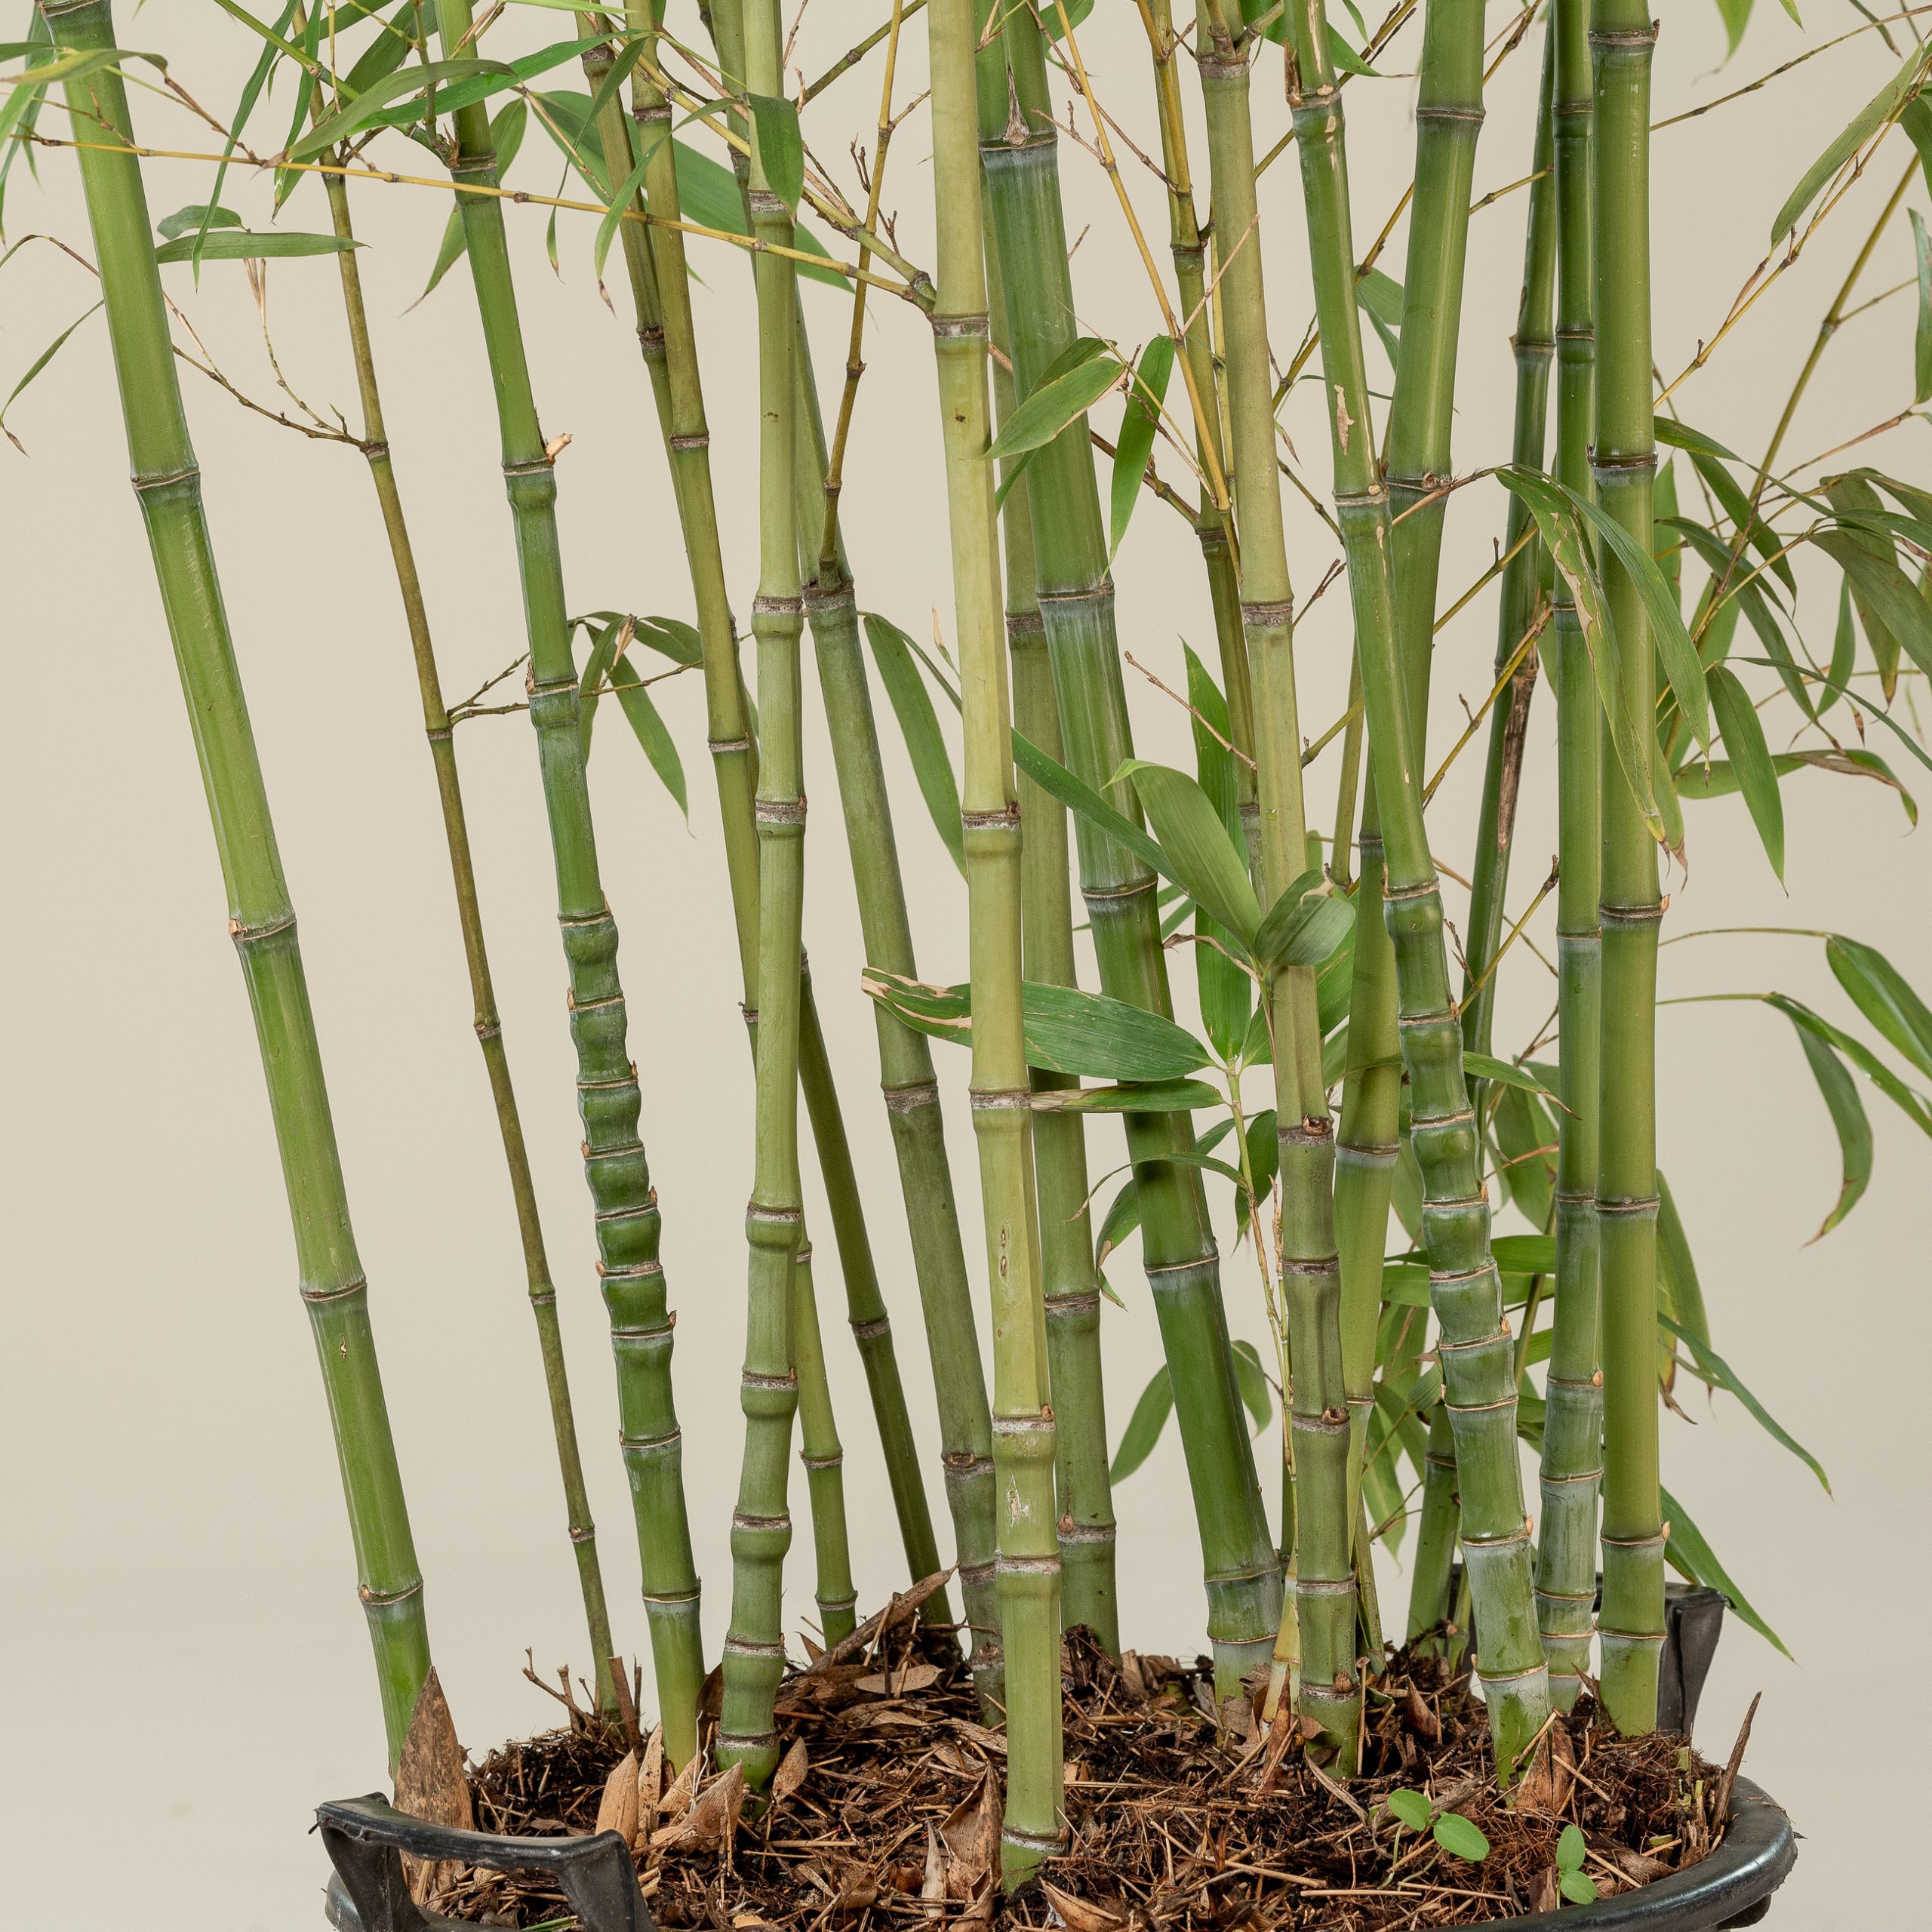 5. Golden Bamboo - Phyllostachys aurea